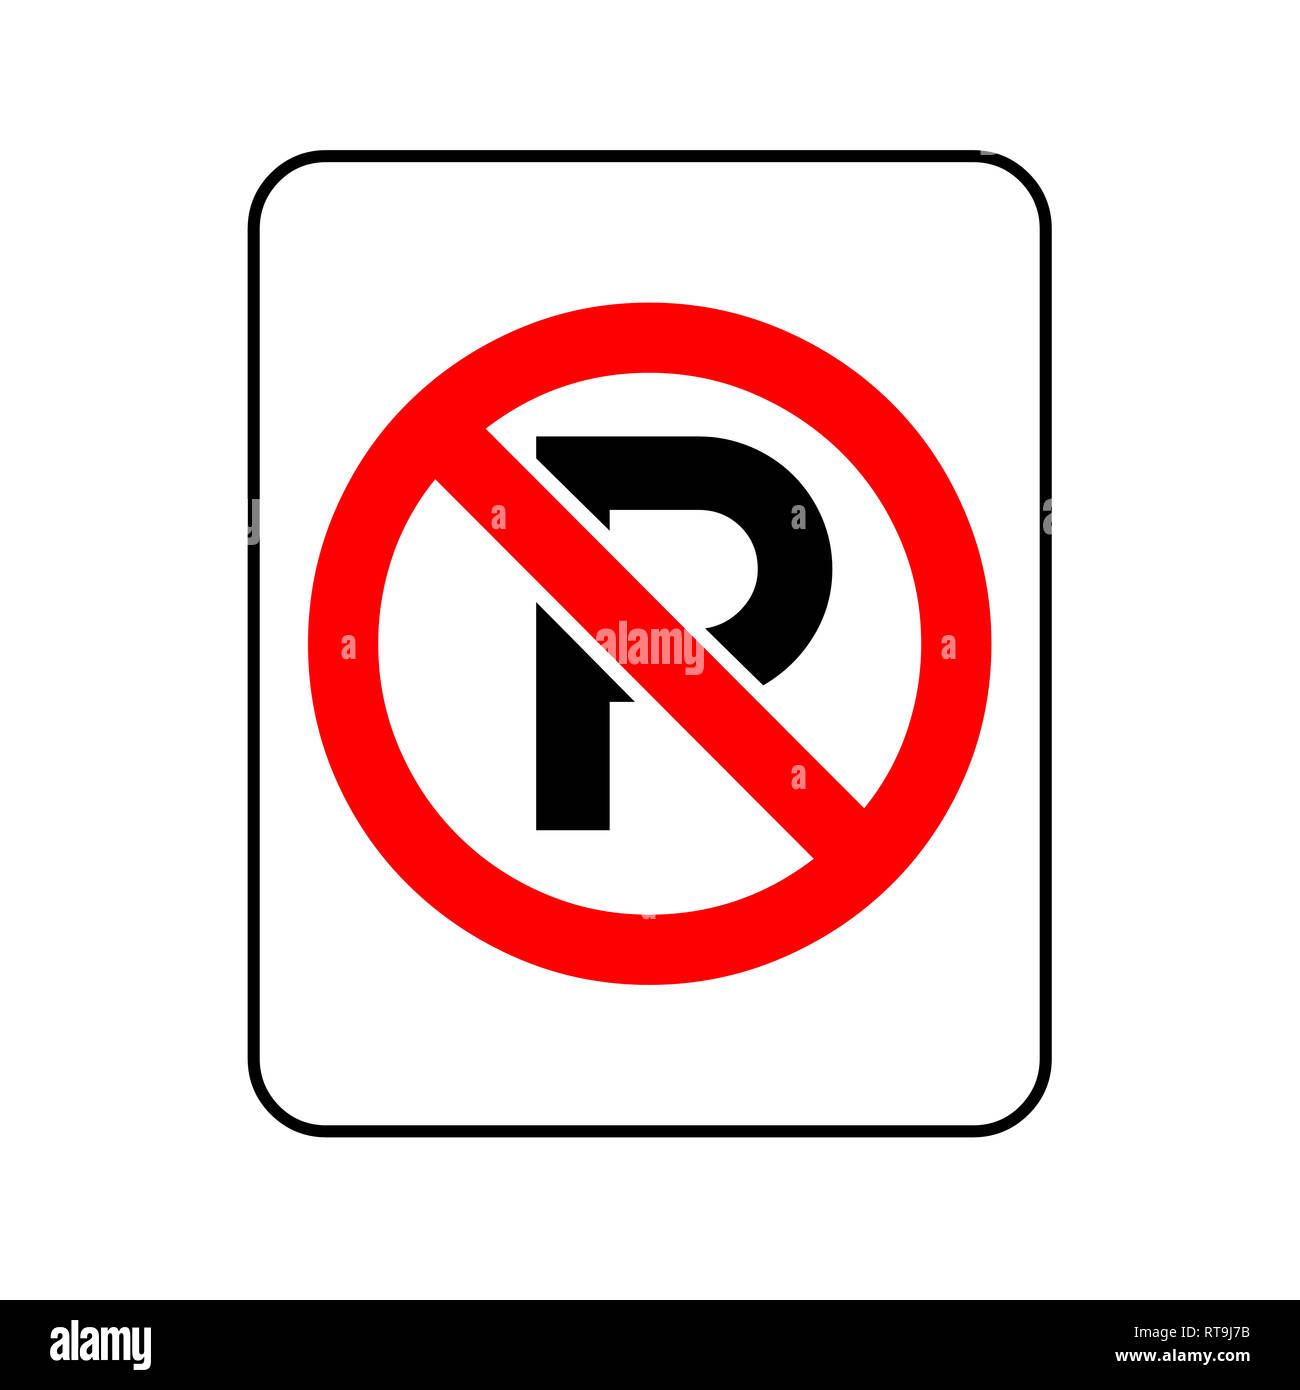 No parking sign icon illustration Stock Photo